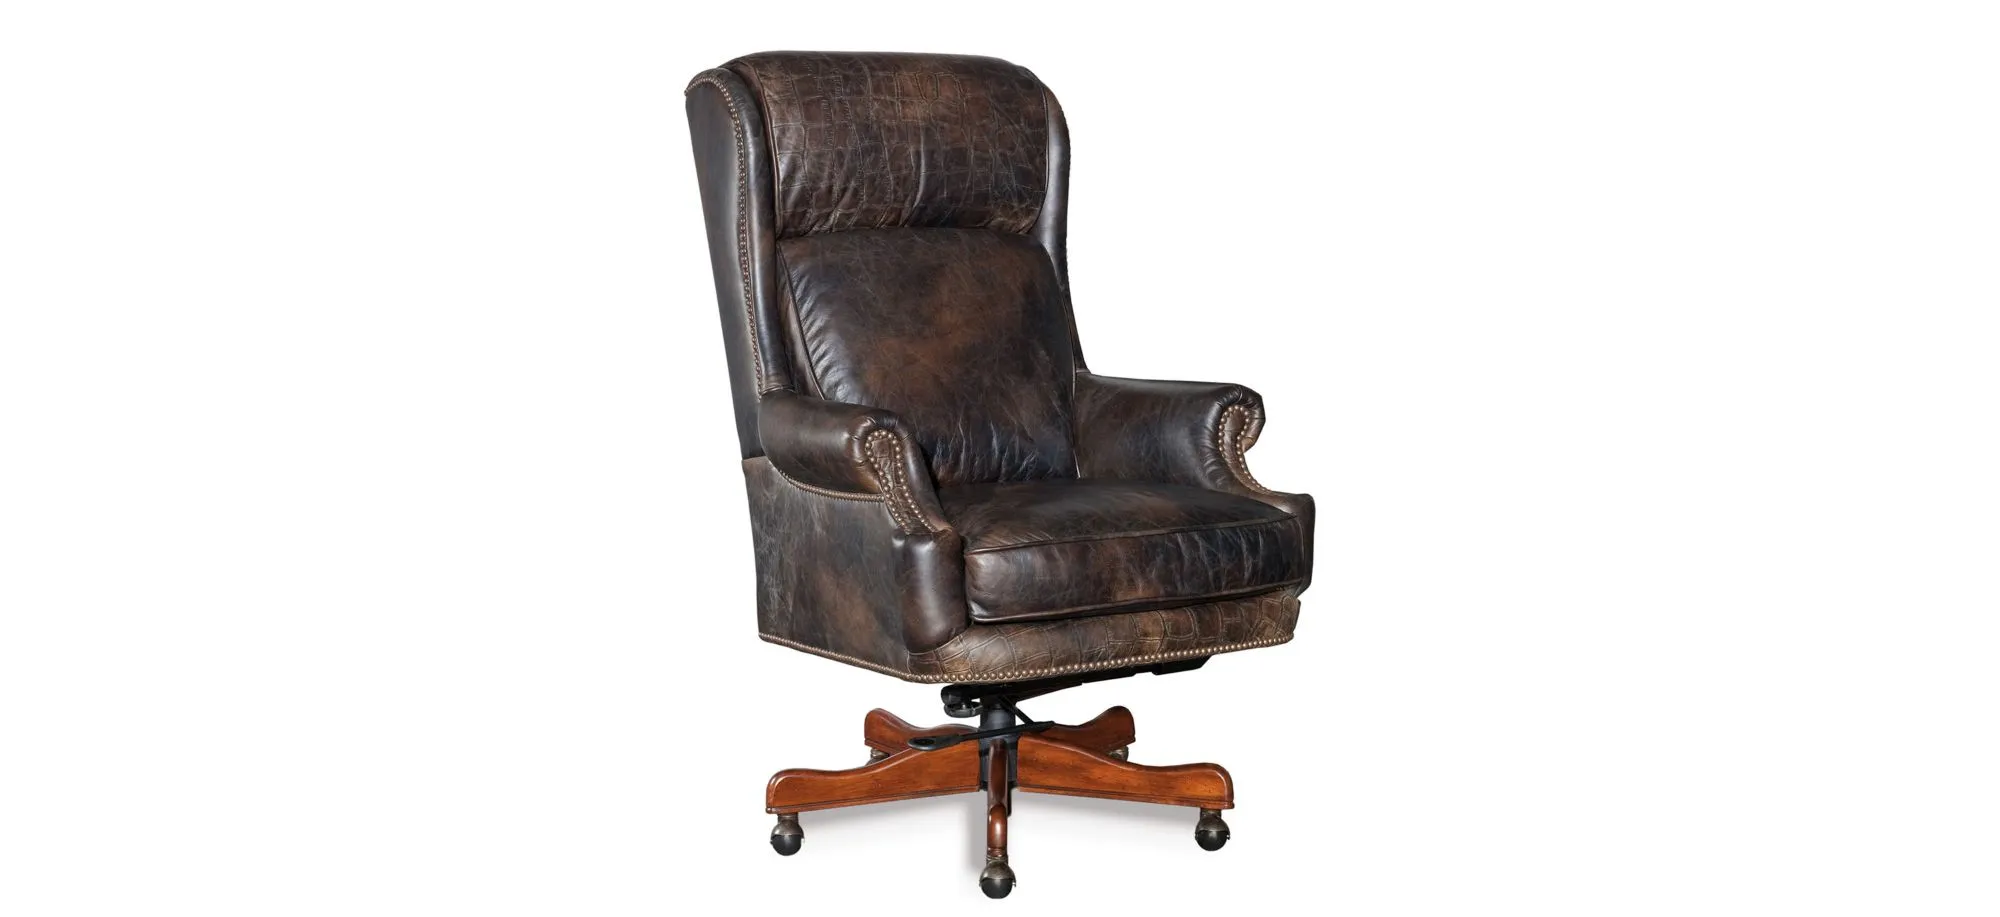 Tucker Executive Swivel Tilt Chair in Brown by Hooker Furniture